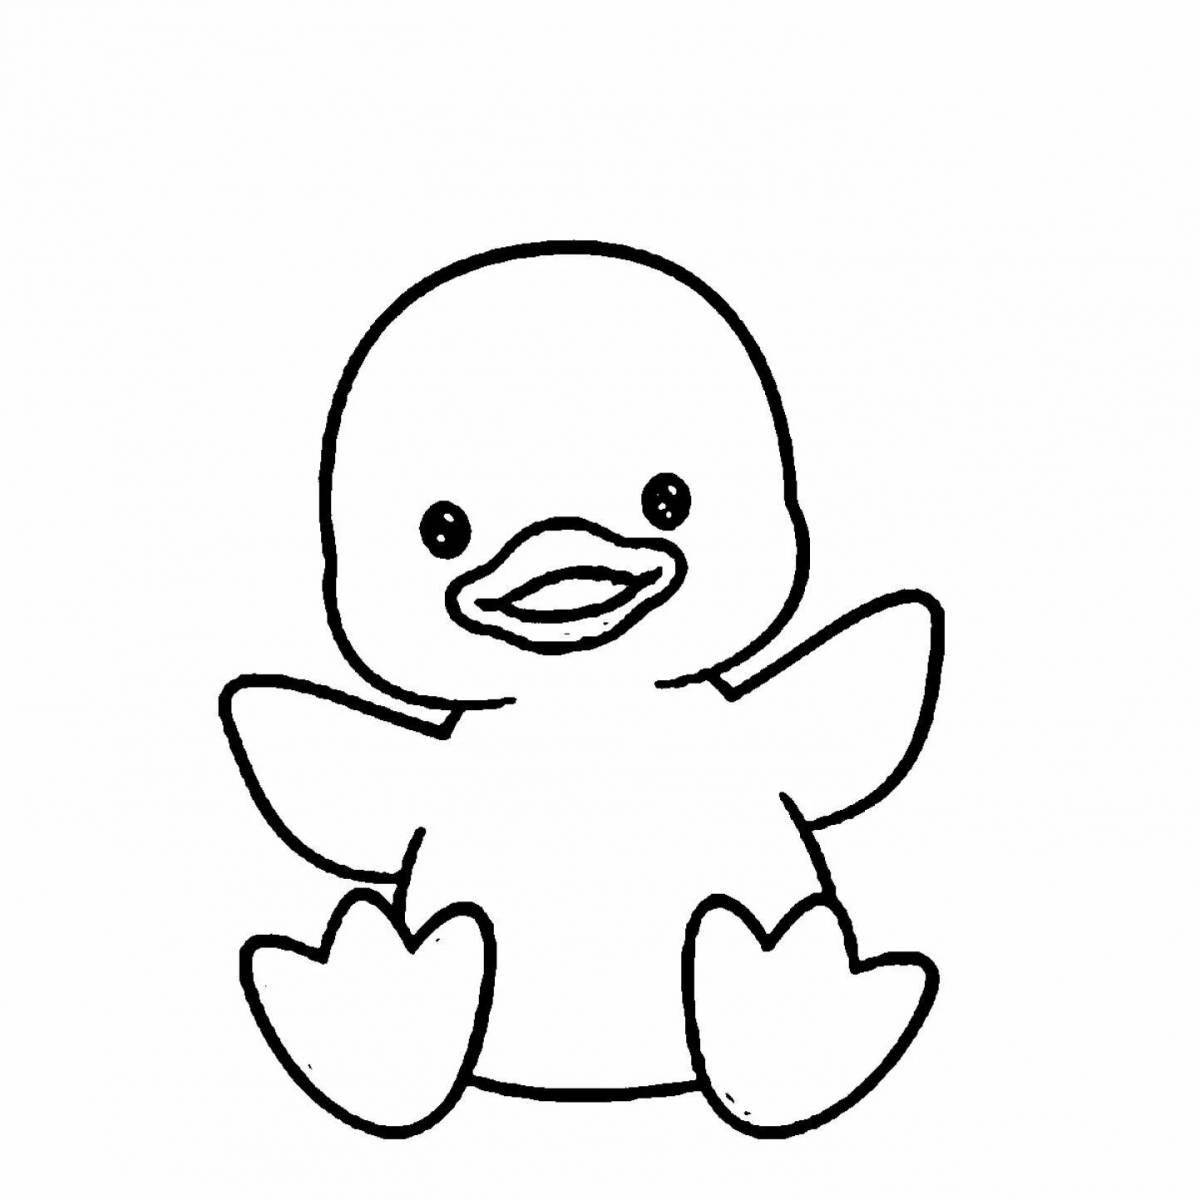 Coloring book joyful duck